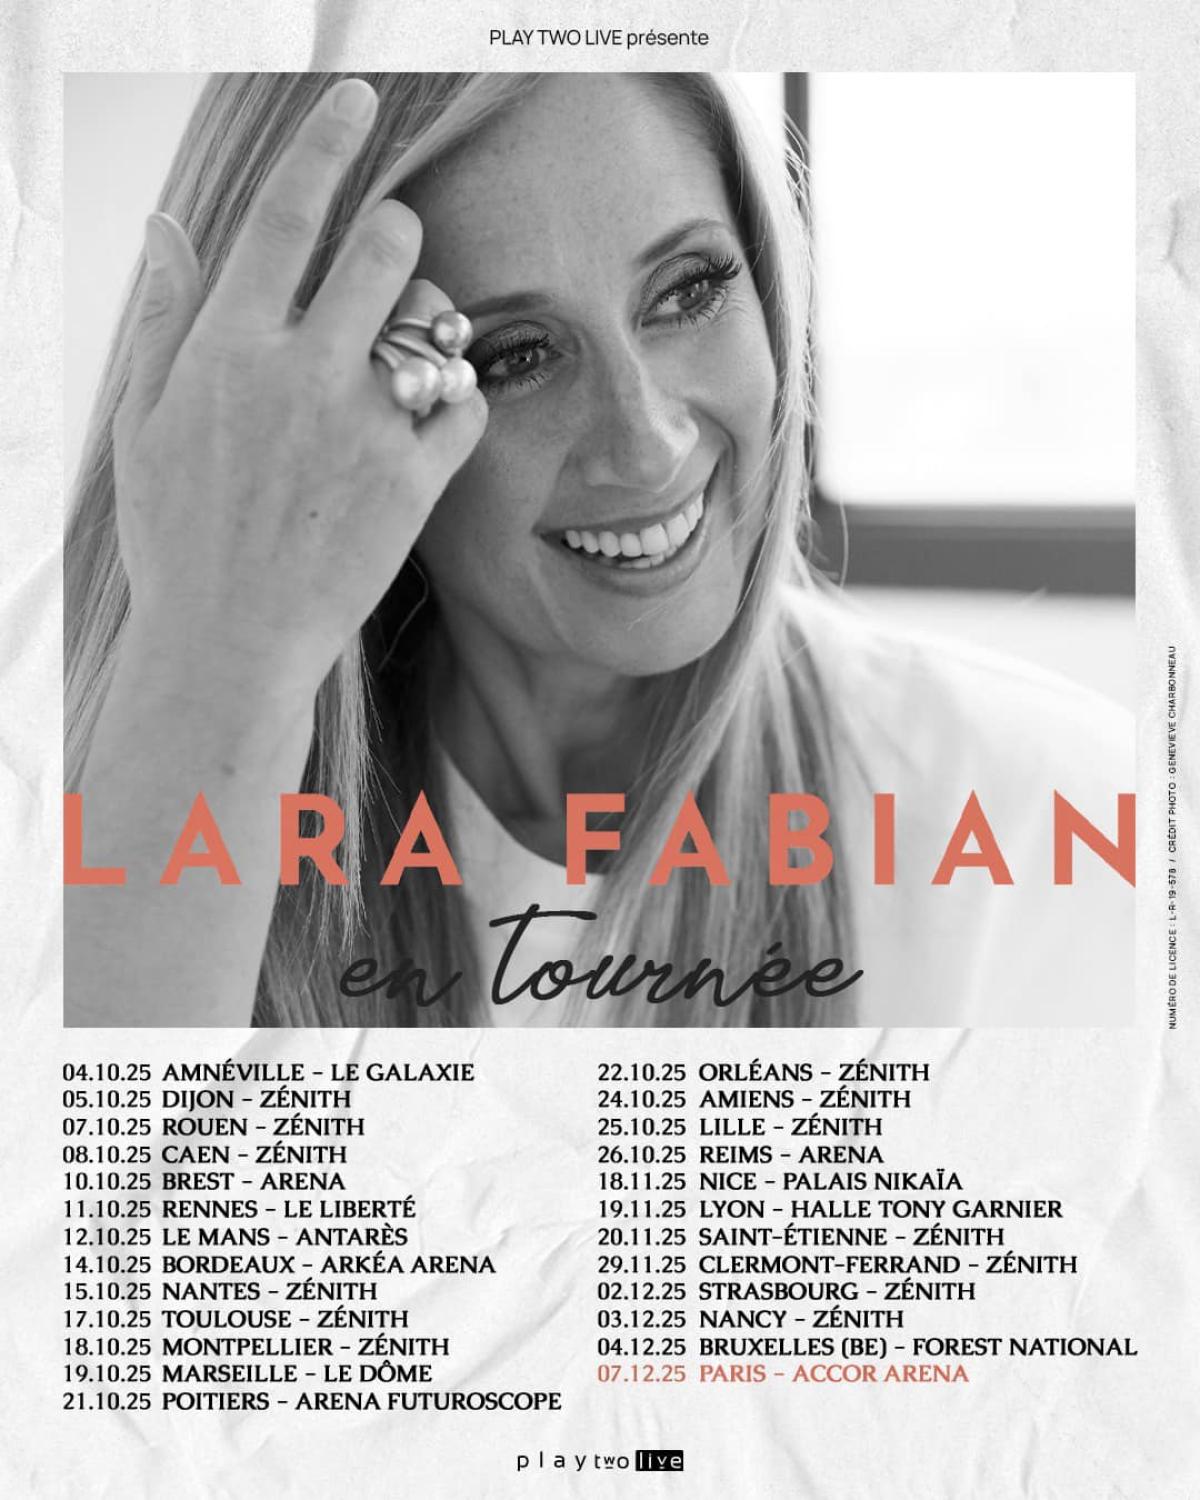 Lara Fabian at Reims Arena Tickets